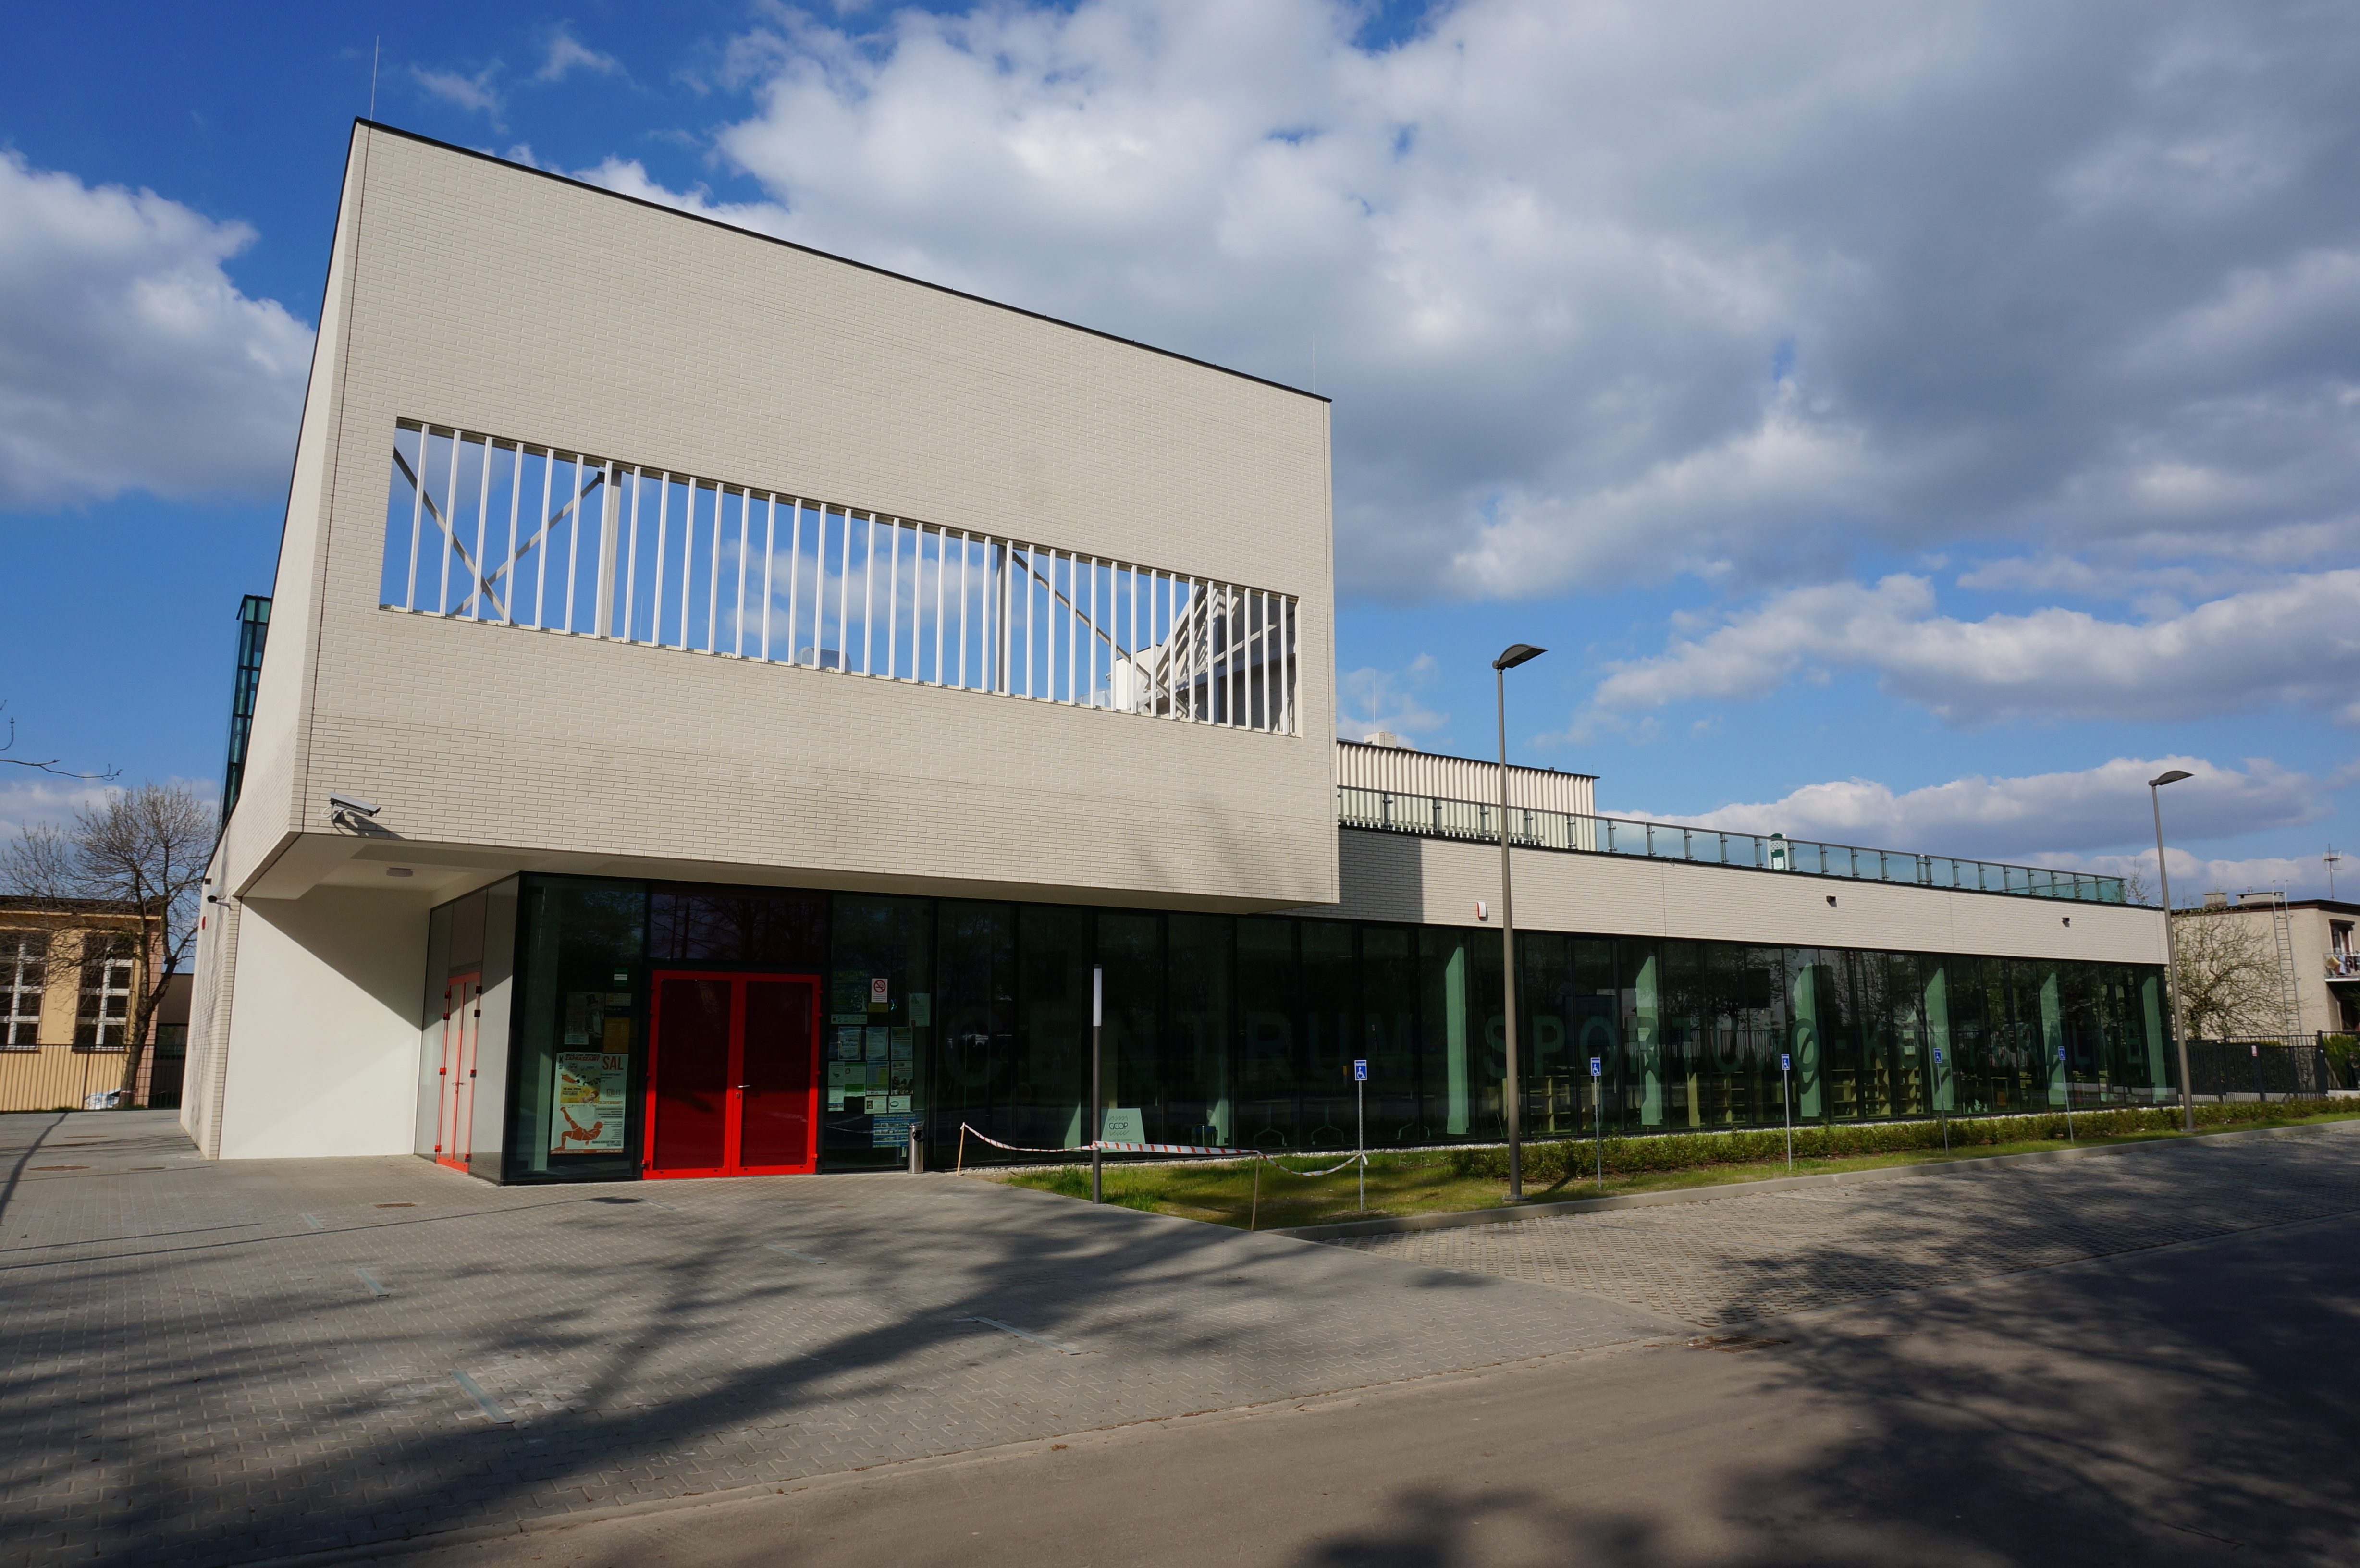 “Łabędź” Cultural and Sports Center